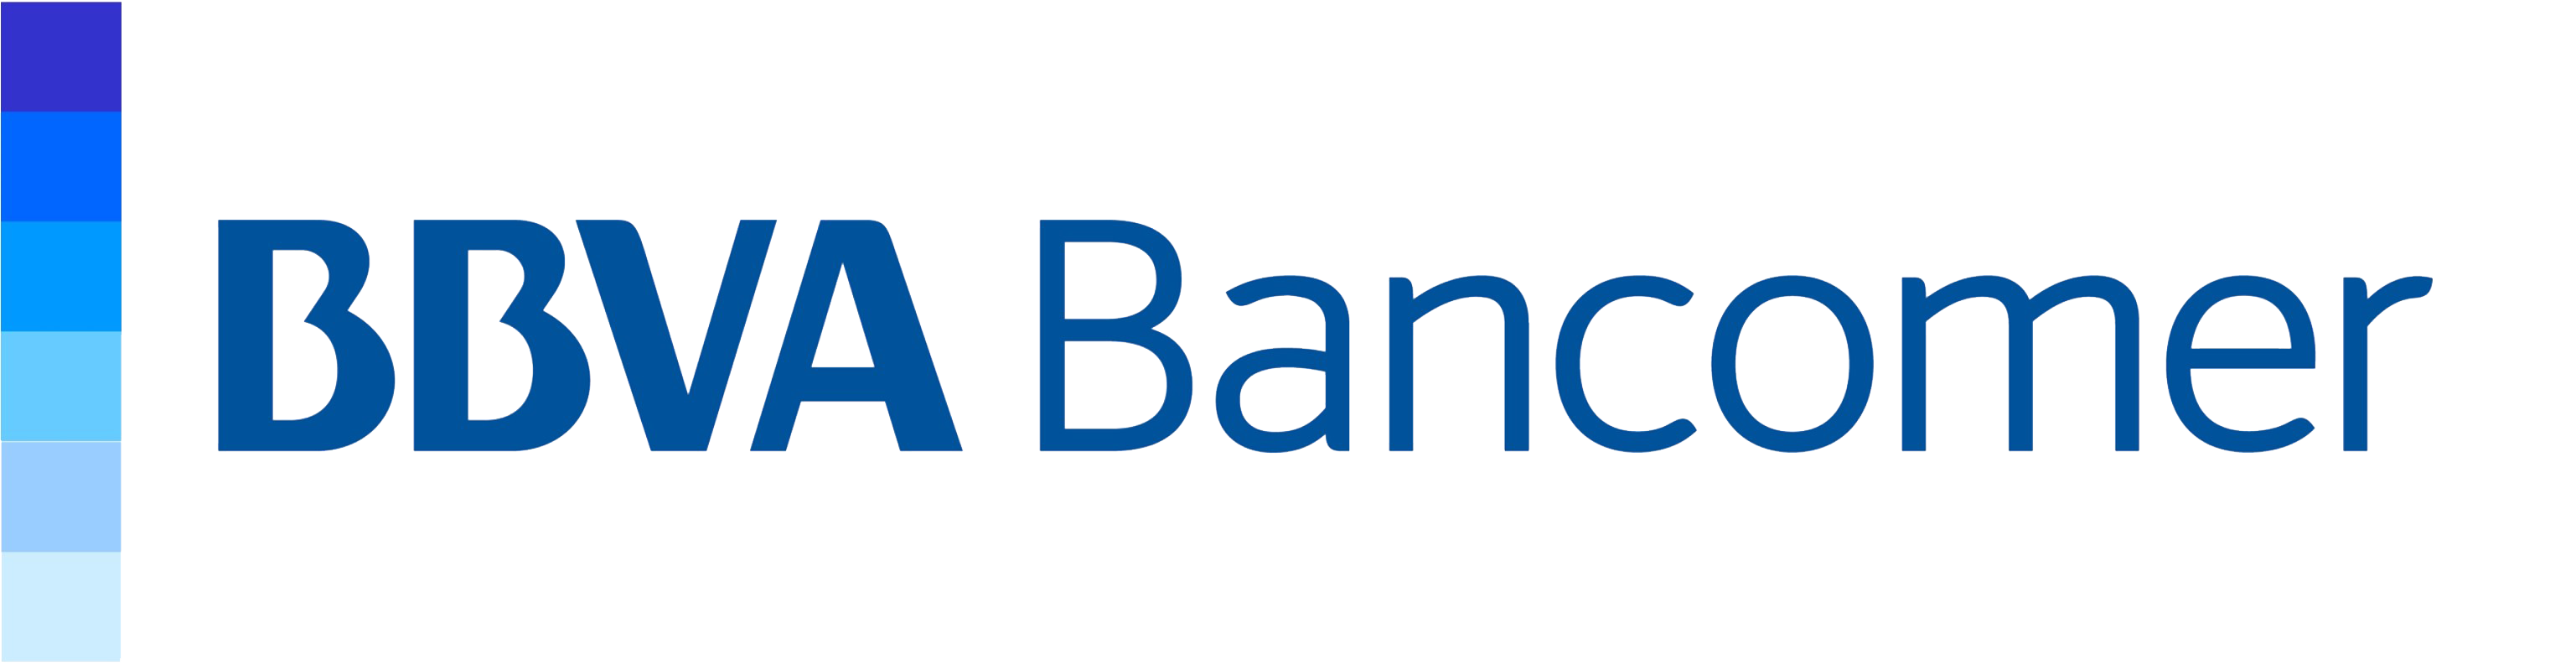 Bancomer Empresas